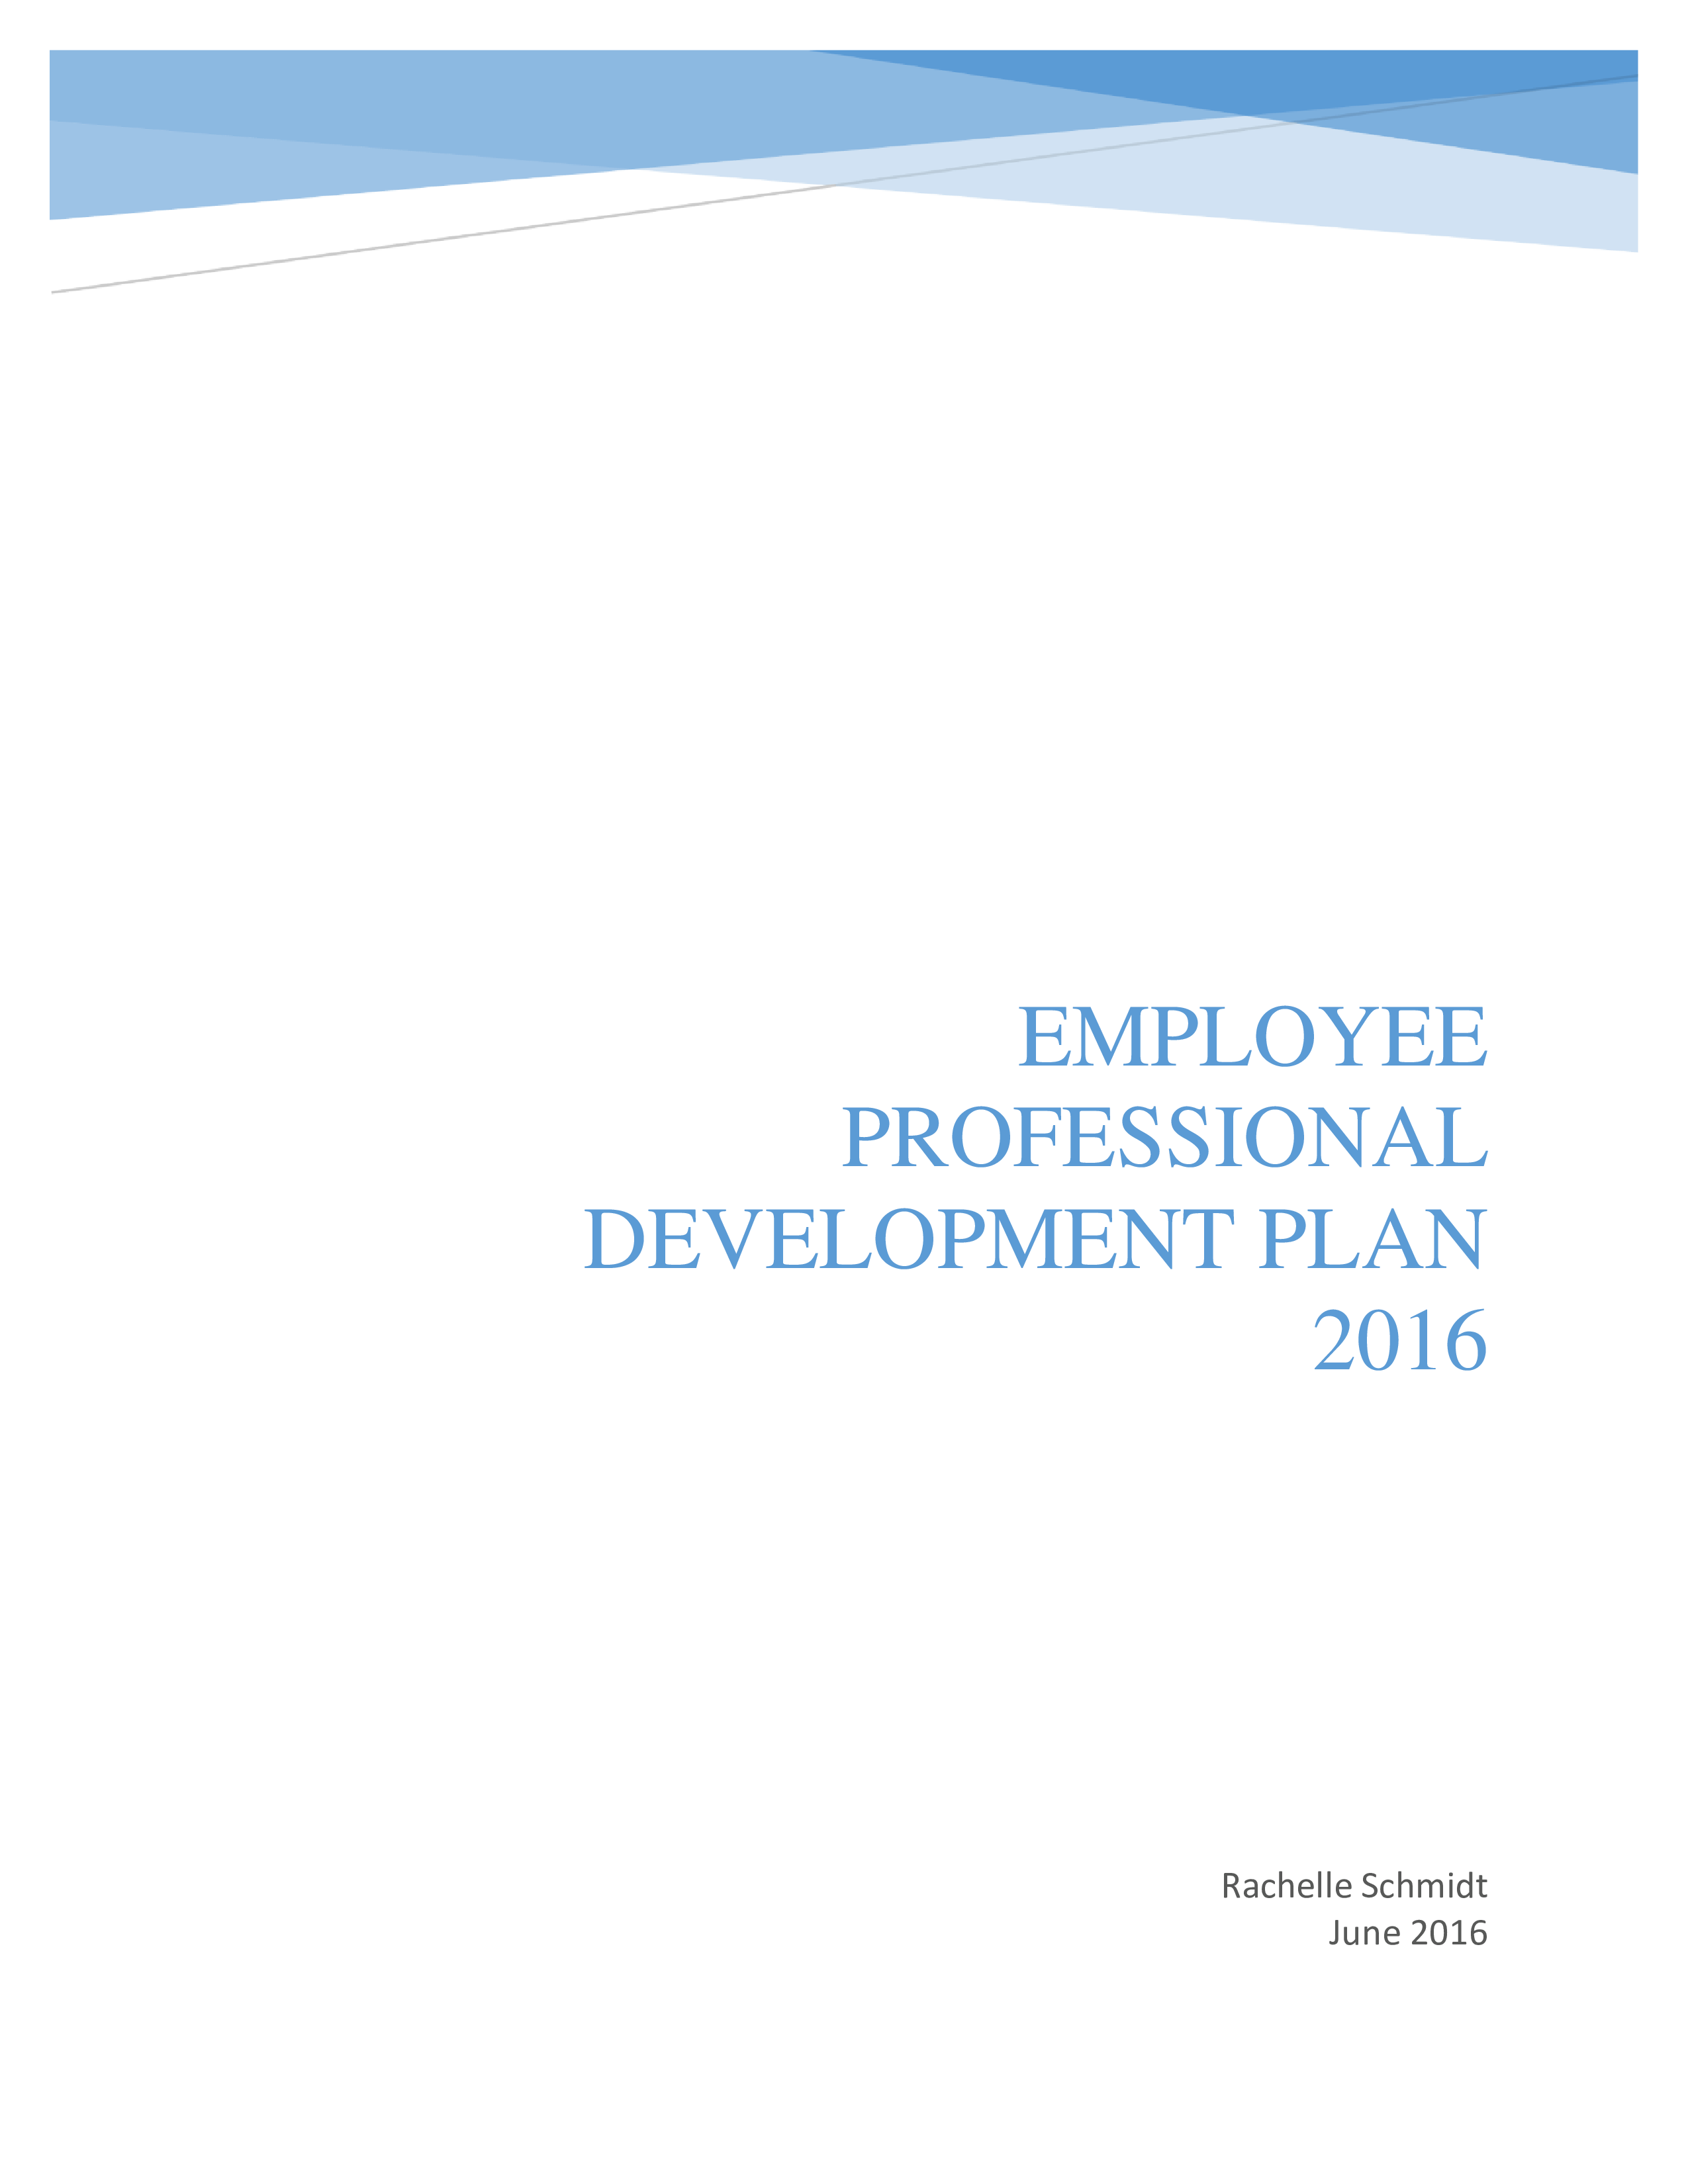 Employee Professional Development Plan main image